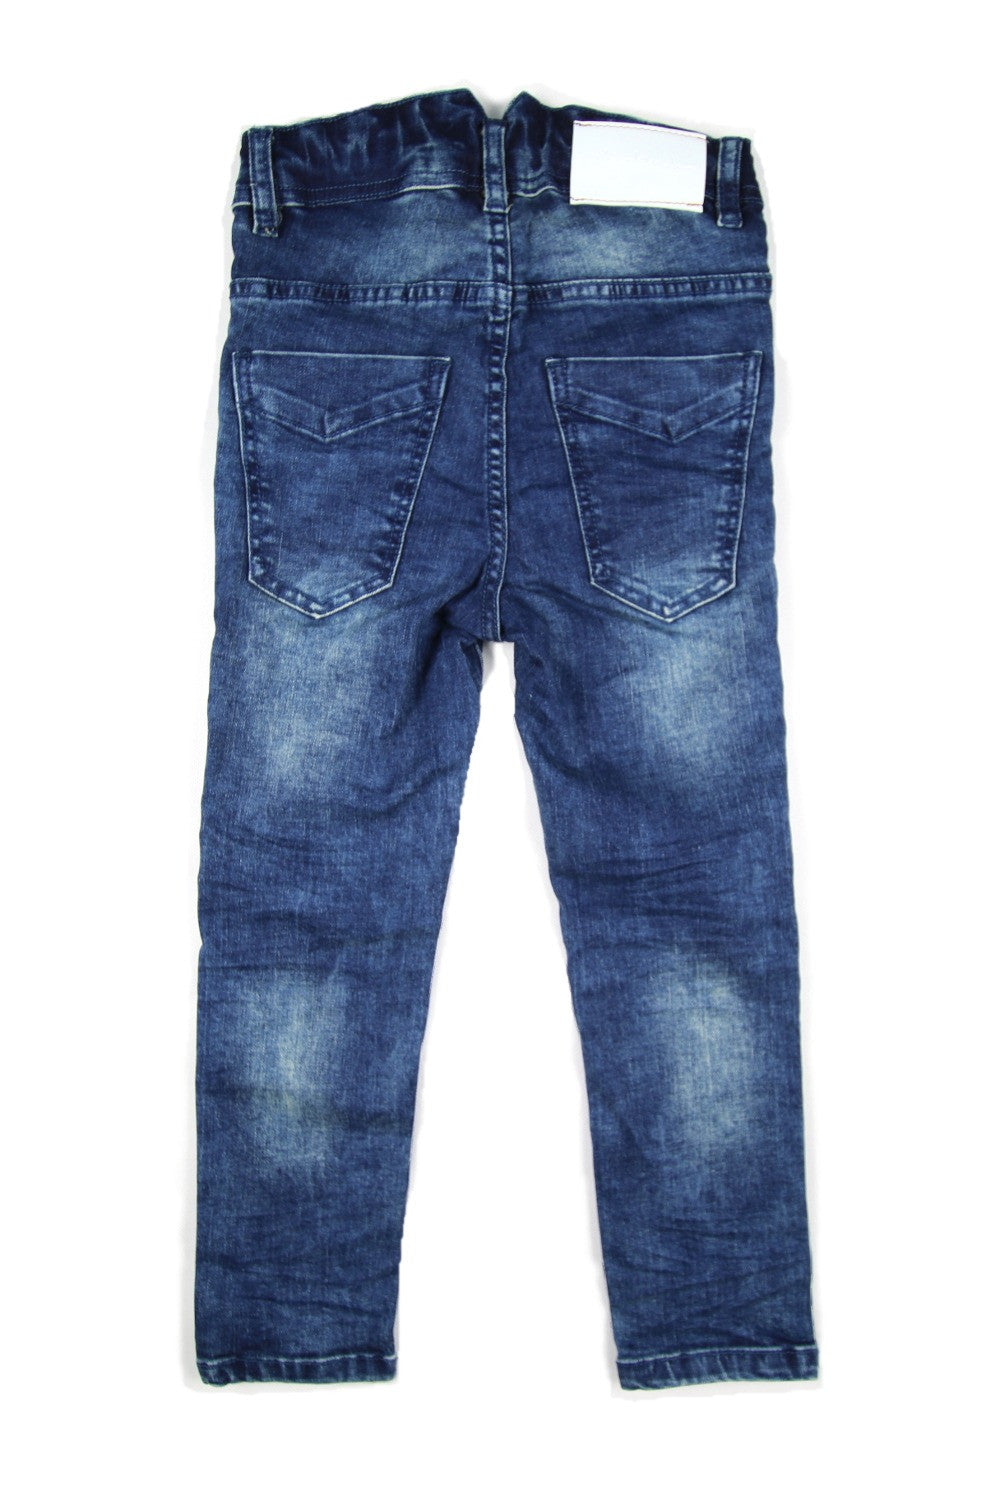 arizona blue jeans